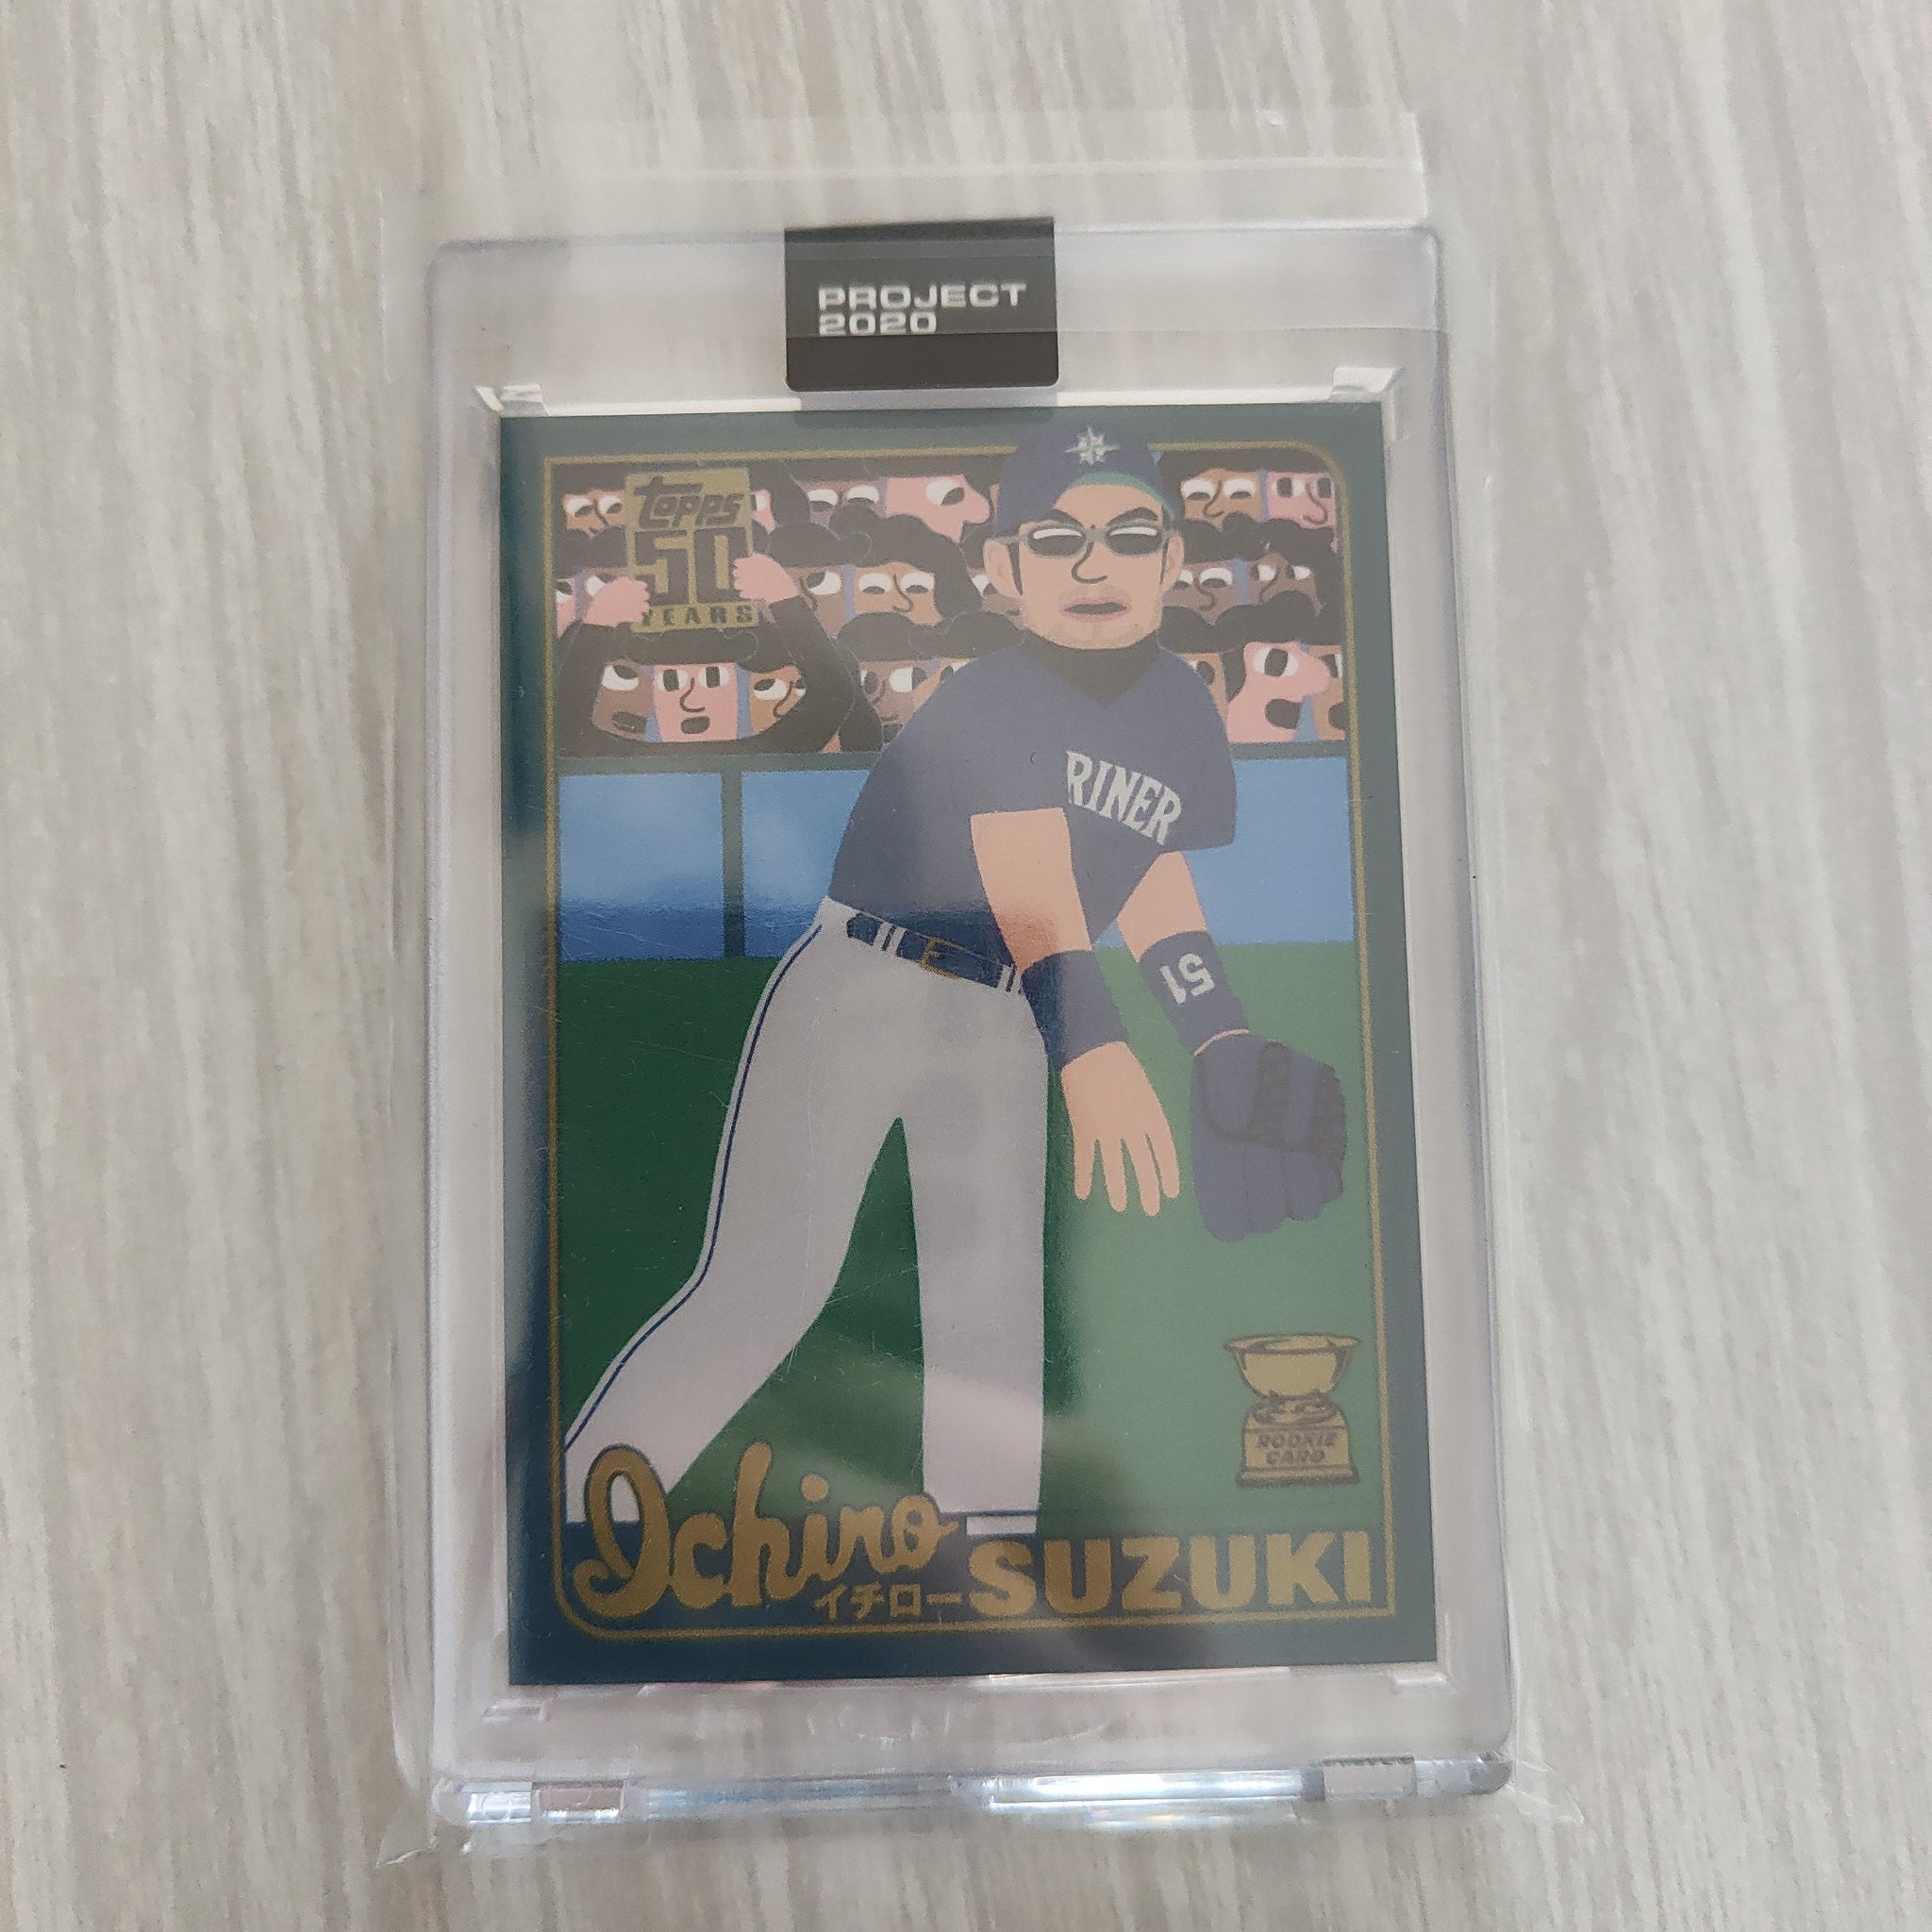 2020 Topps Project 2020 Ichiro Card #120 Artist Keith Shore Baseball Card